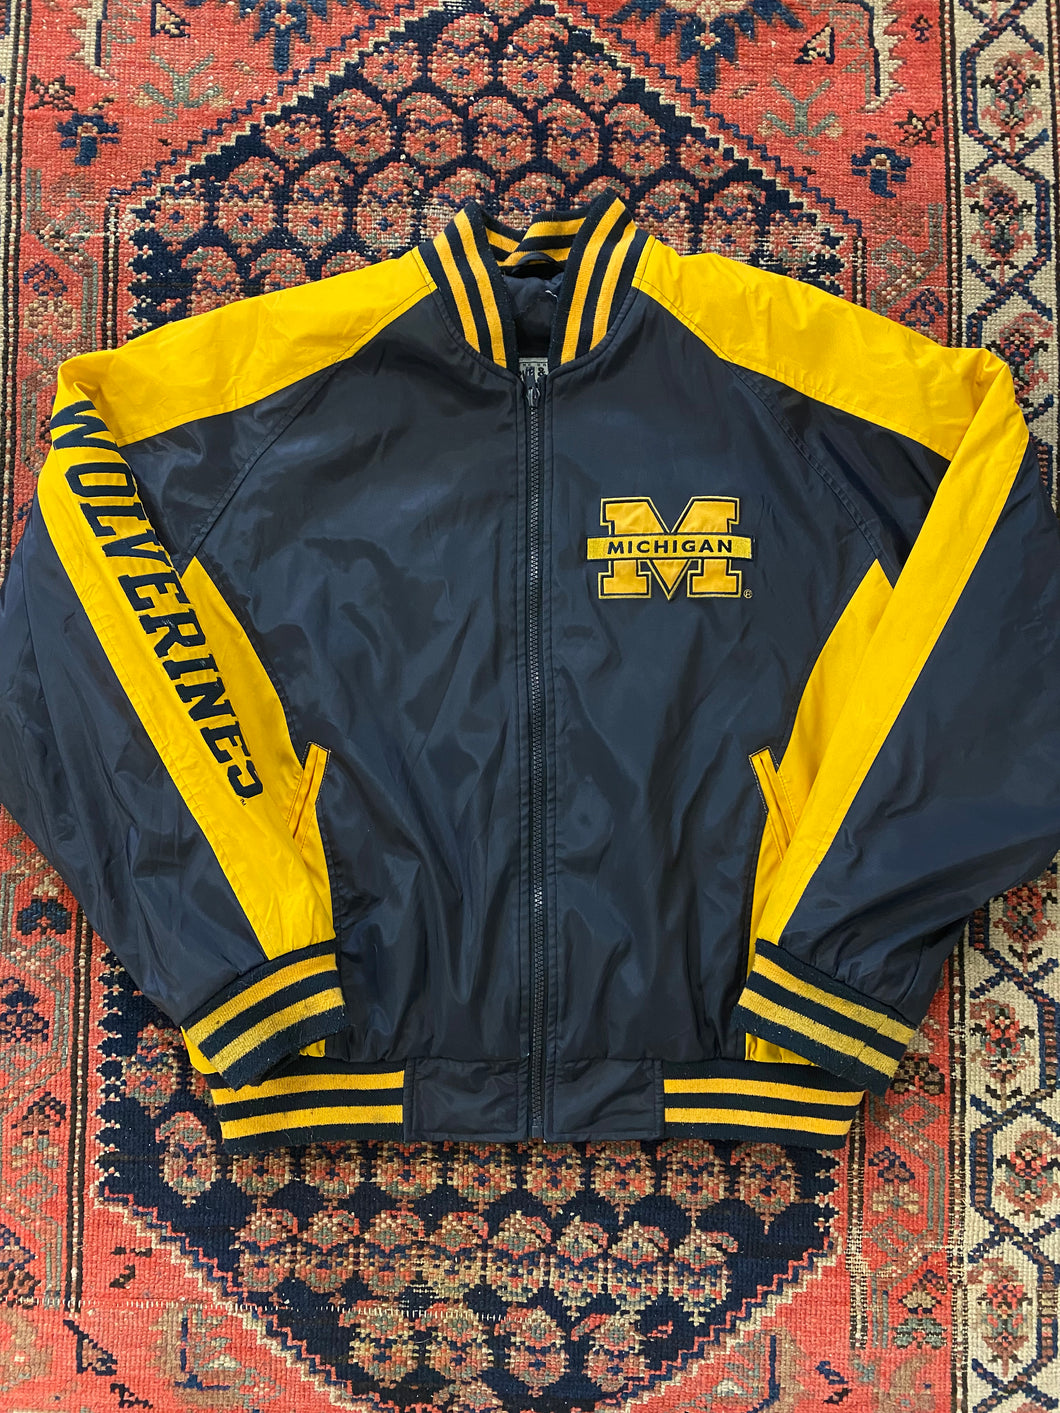 90s Michigan Jacket - M